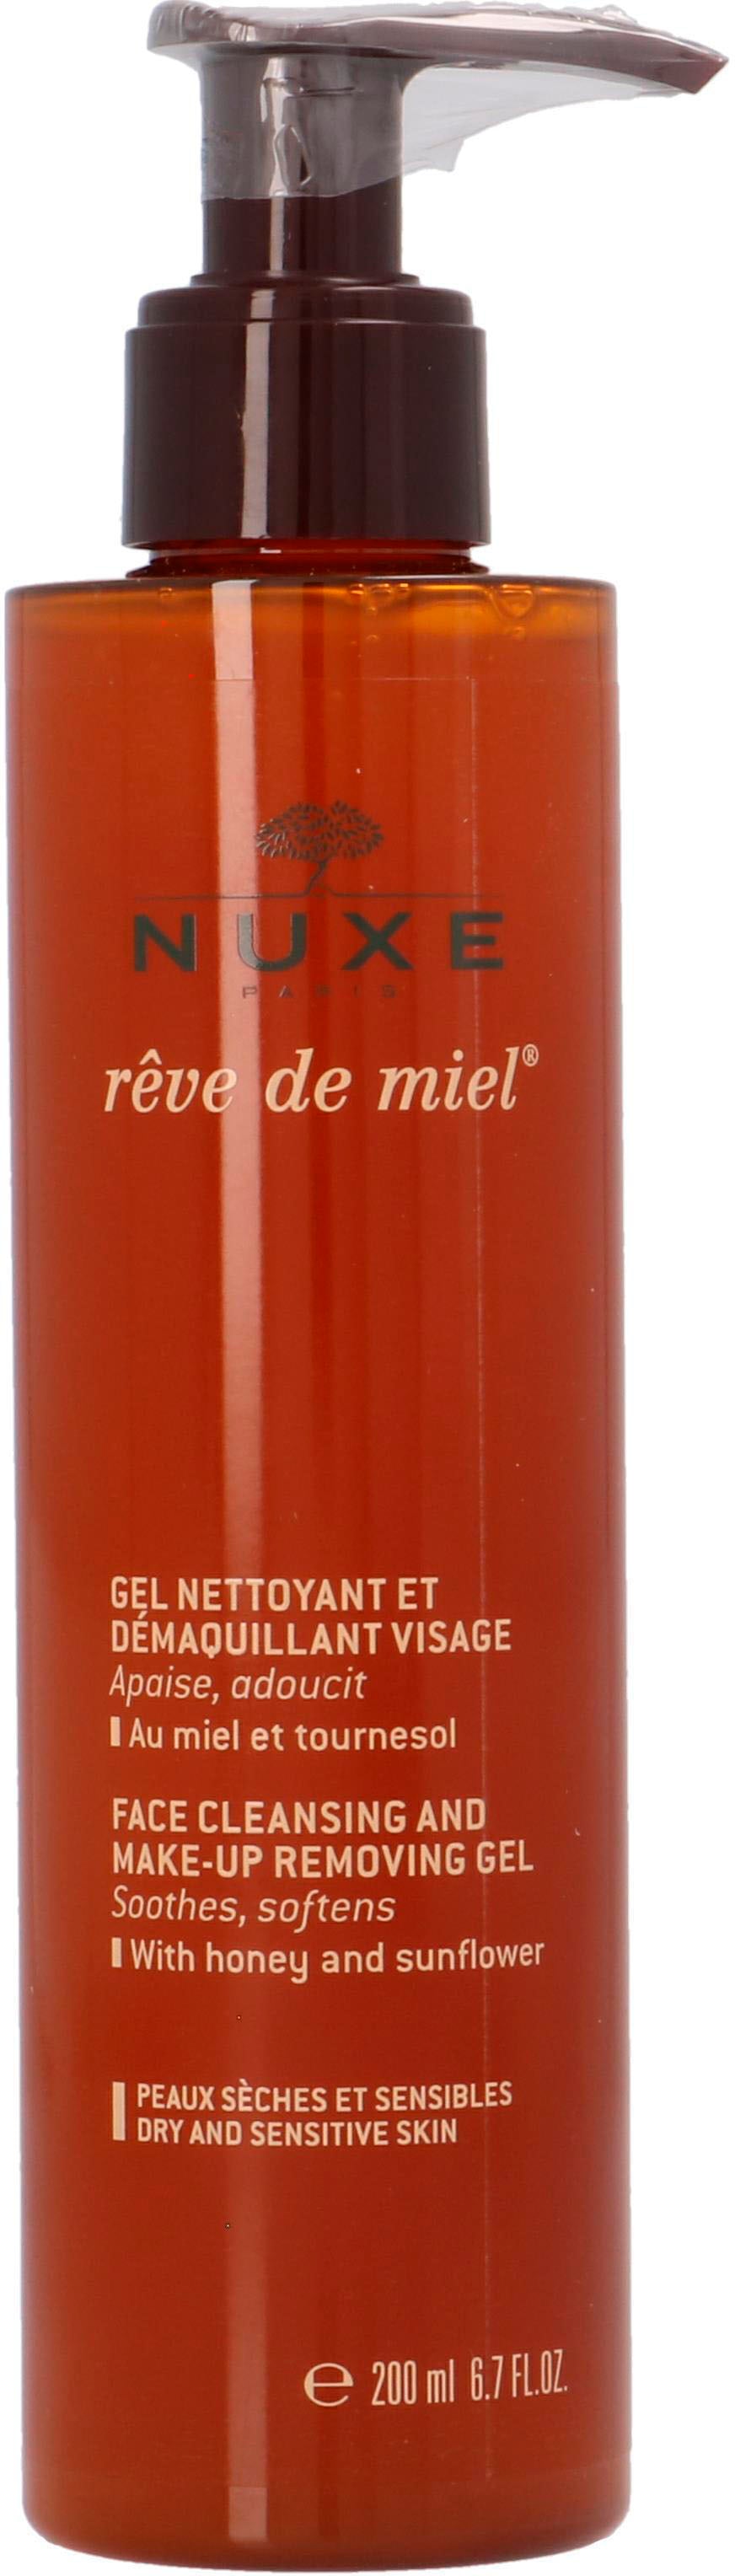 »Rêve Face Gesichtsreinigungsgel BAUR kaufen online Cleansing Gel« Removing De | Make-Up Nuxe Miel And